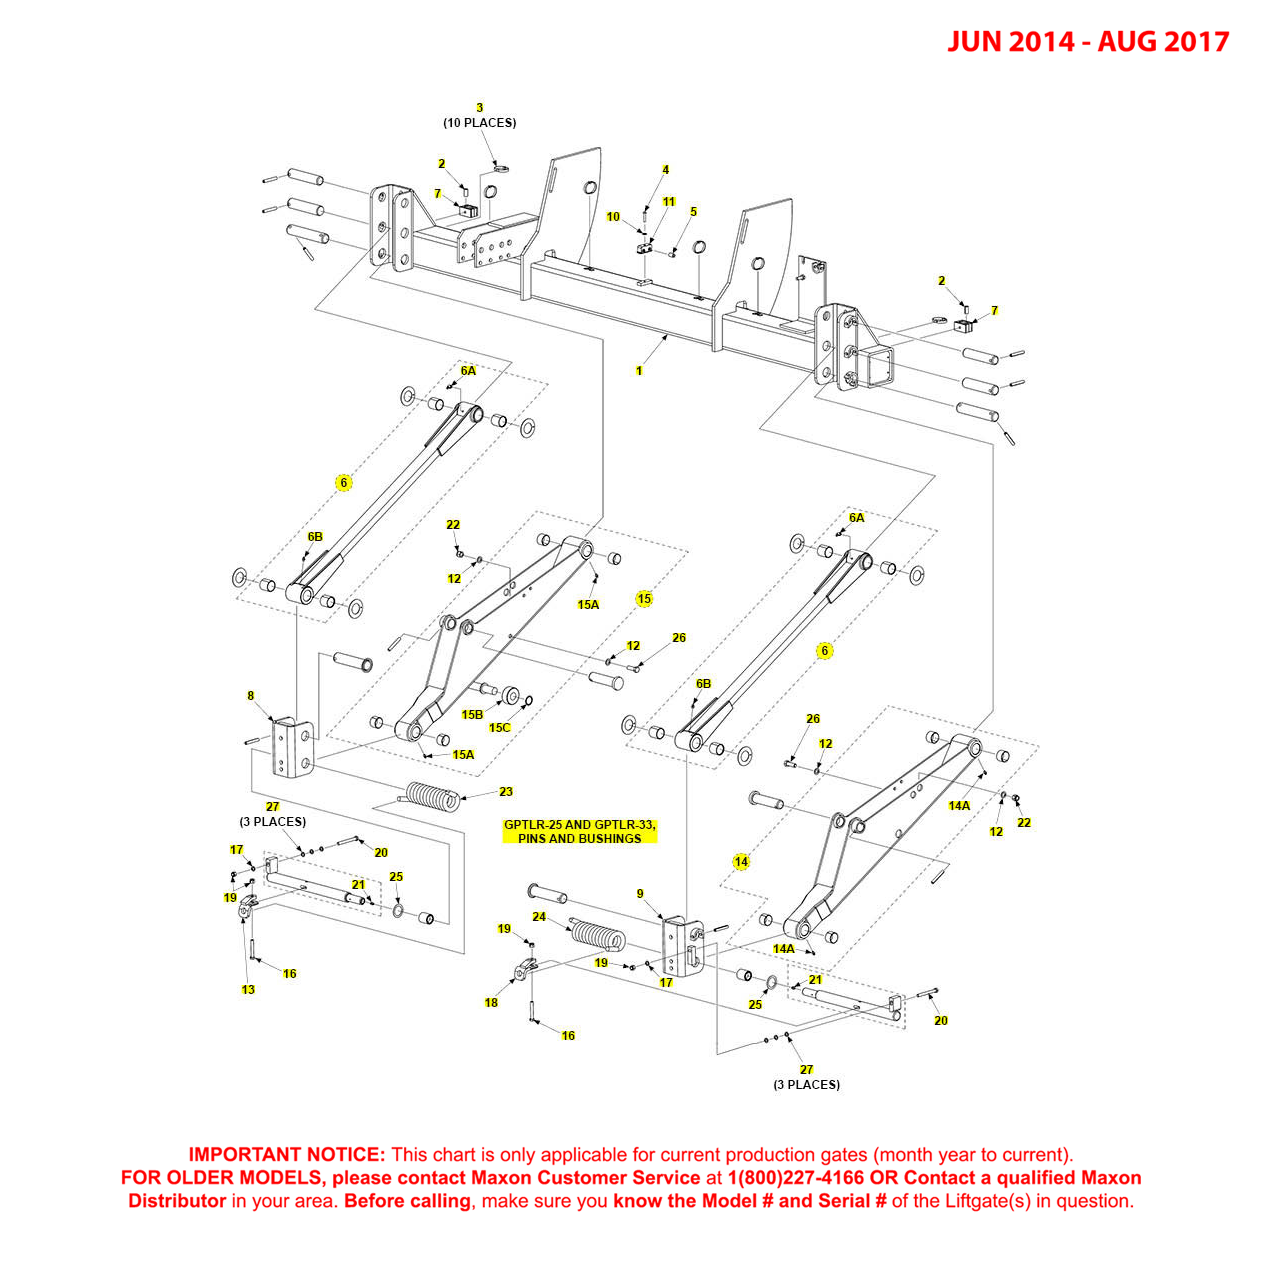 Maxon GPTLR-25 And GPTLR-33 (Jun 2014 - Aug 2017) Main Assembly Diagram